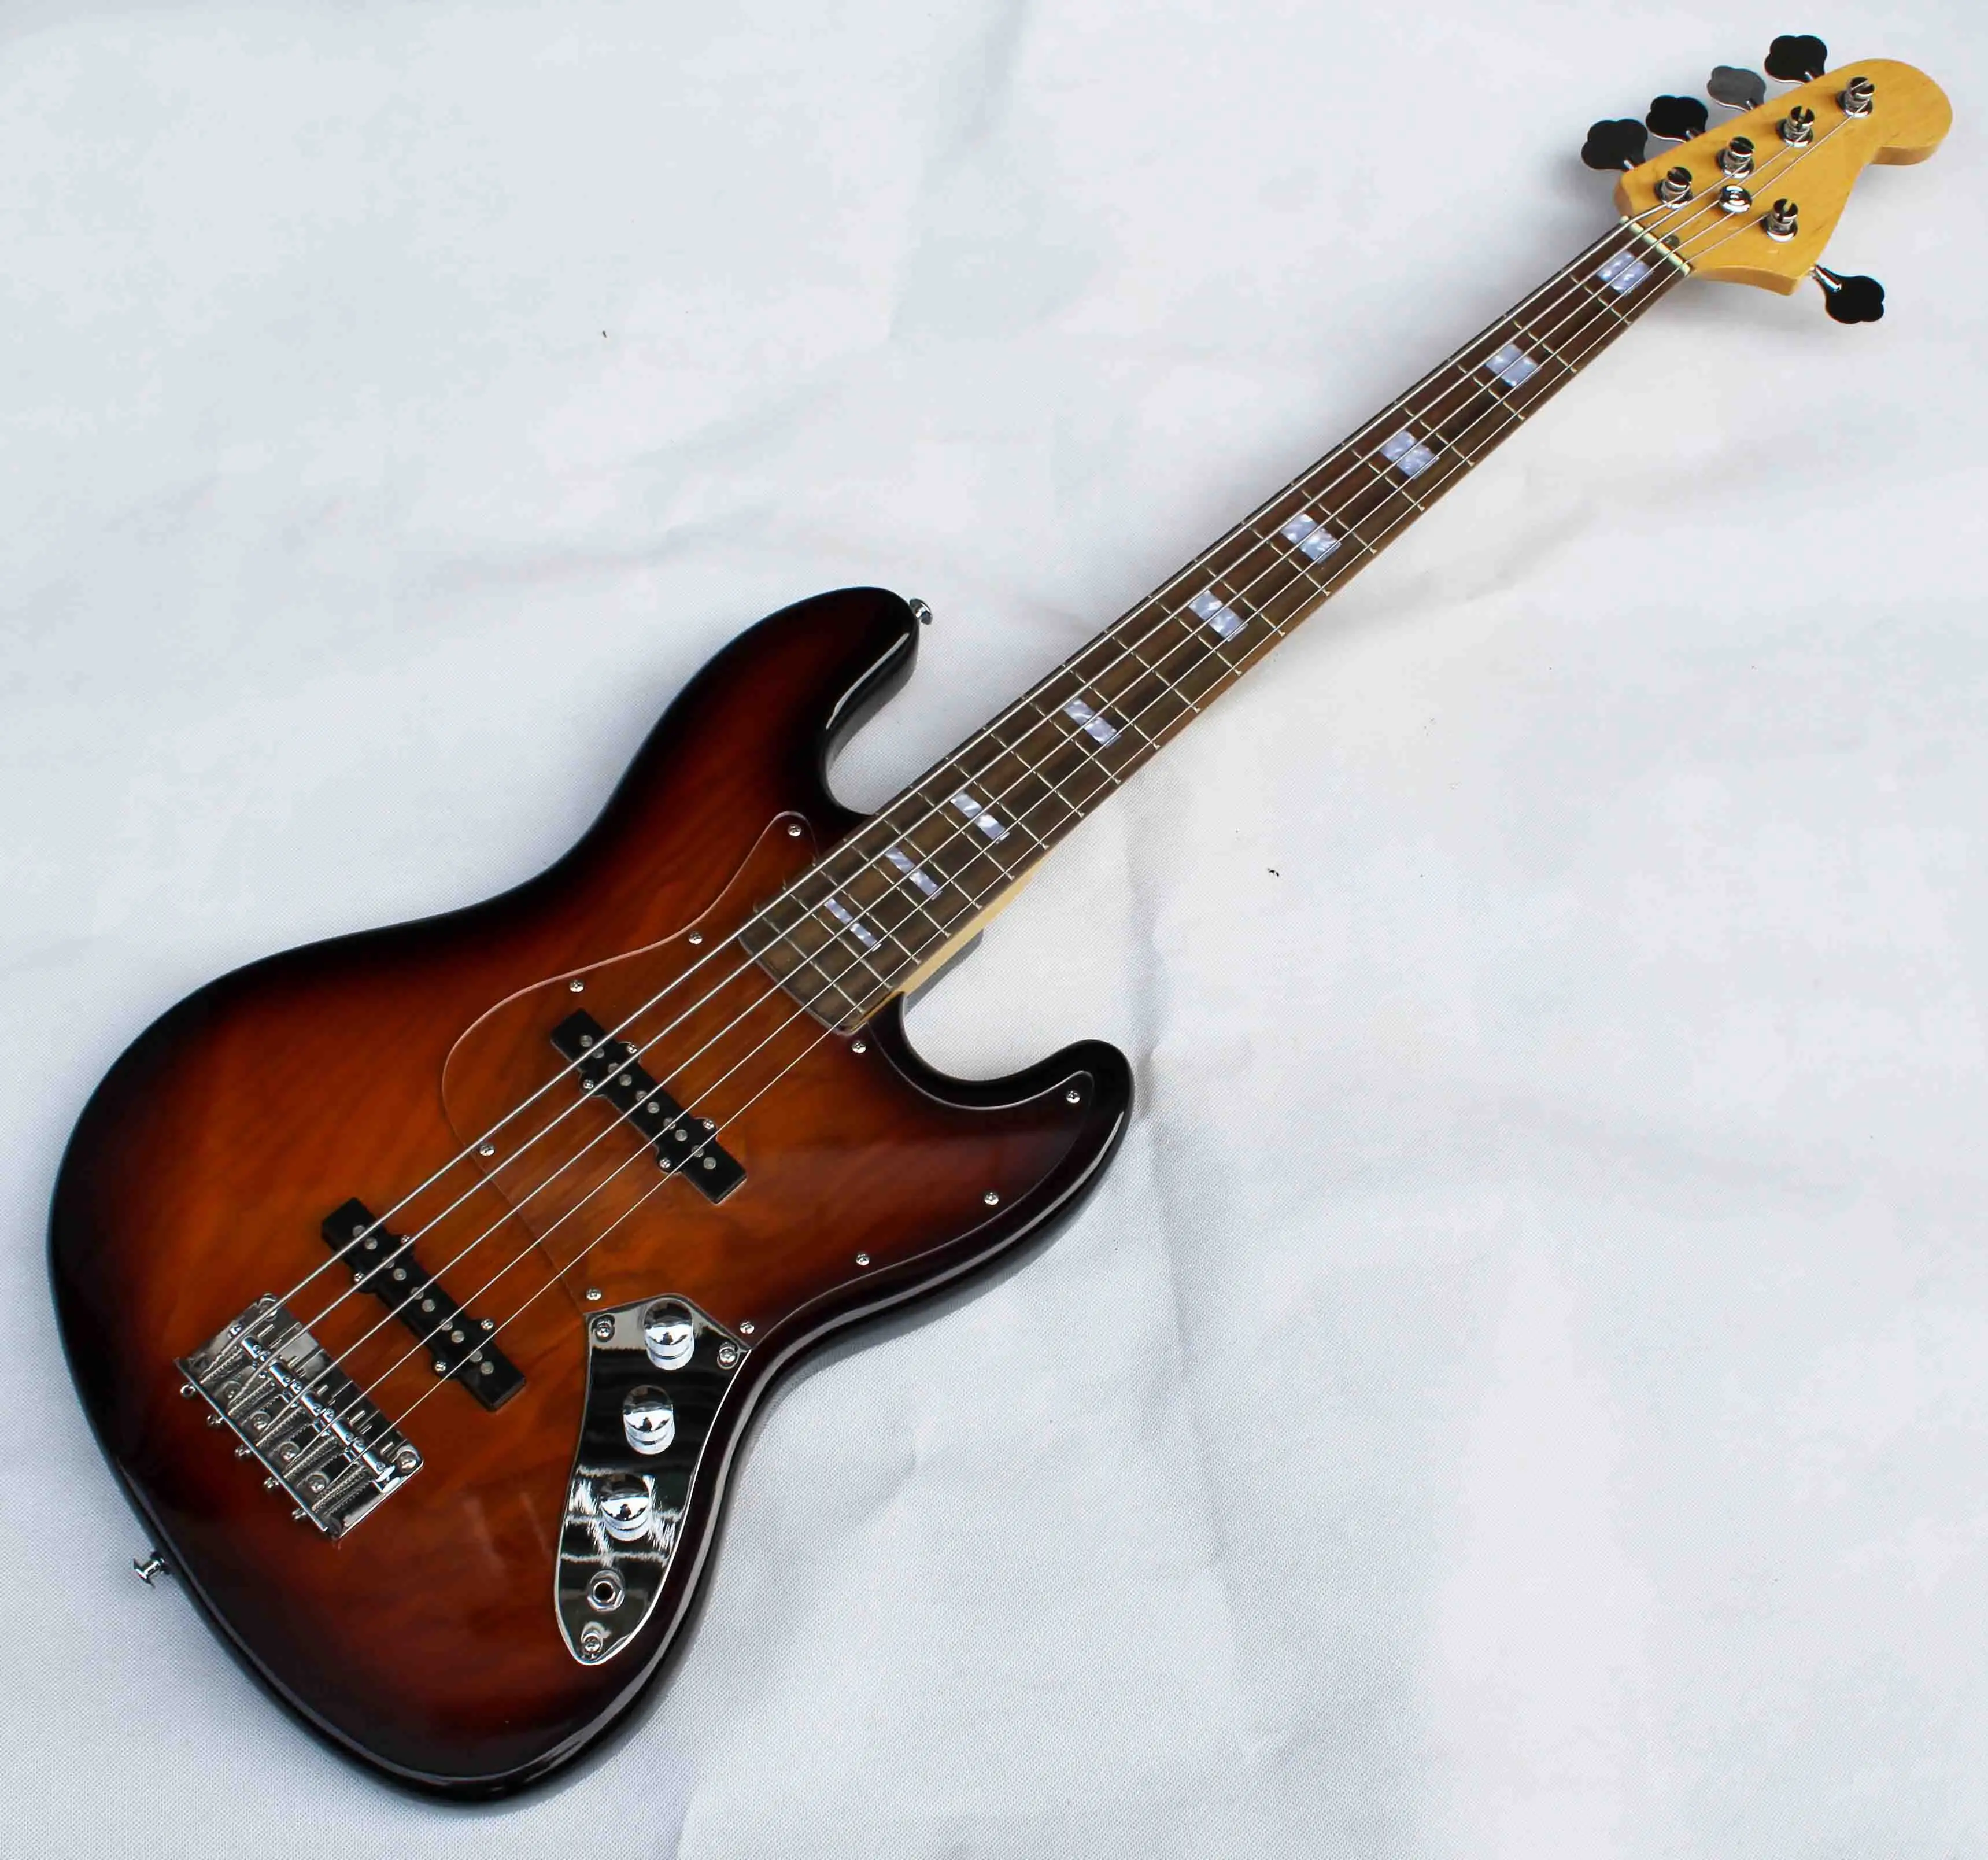 JB-4VS1 china made high quality 4 strings electric bass guitar, customized OEM logo